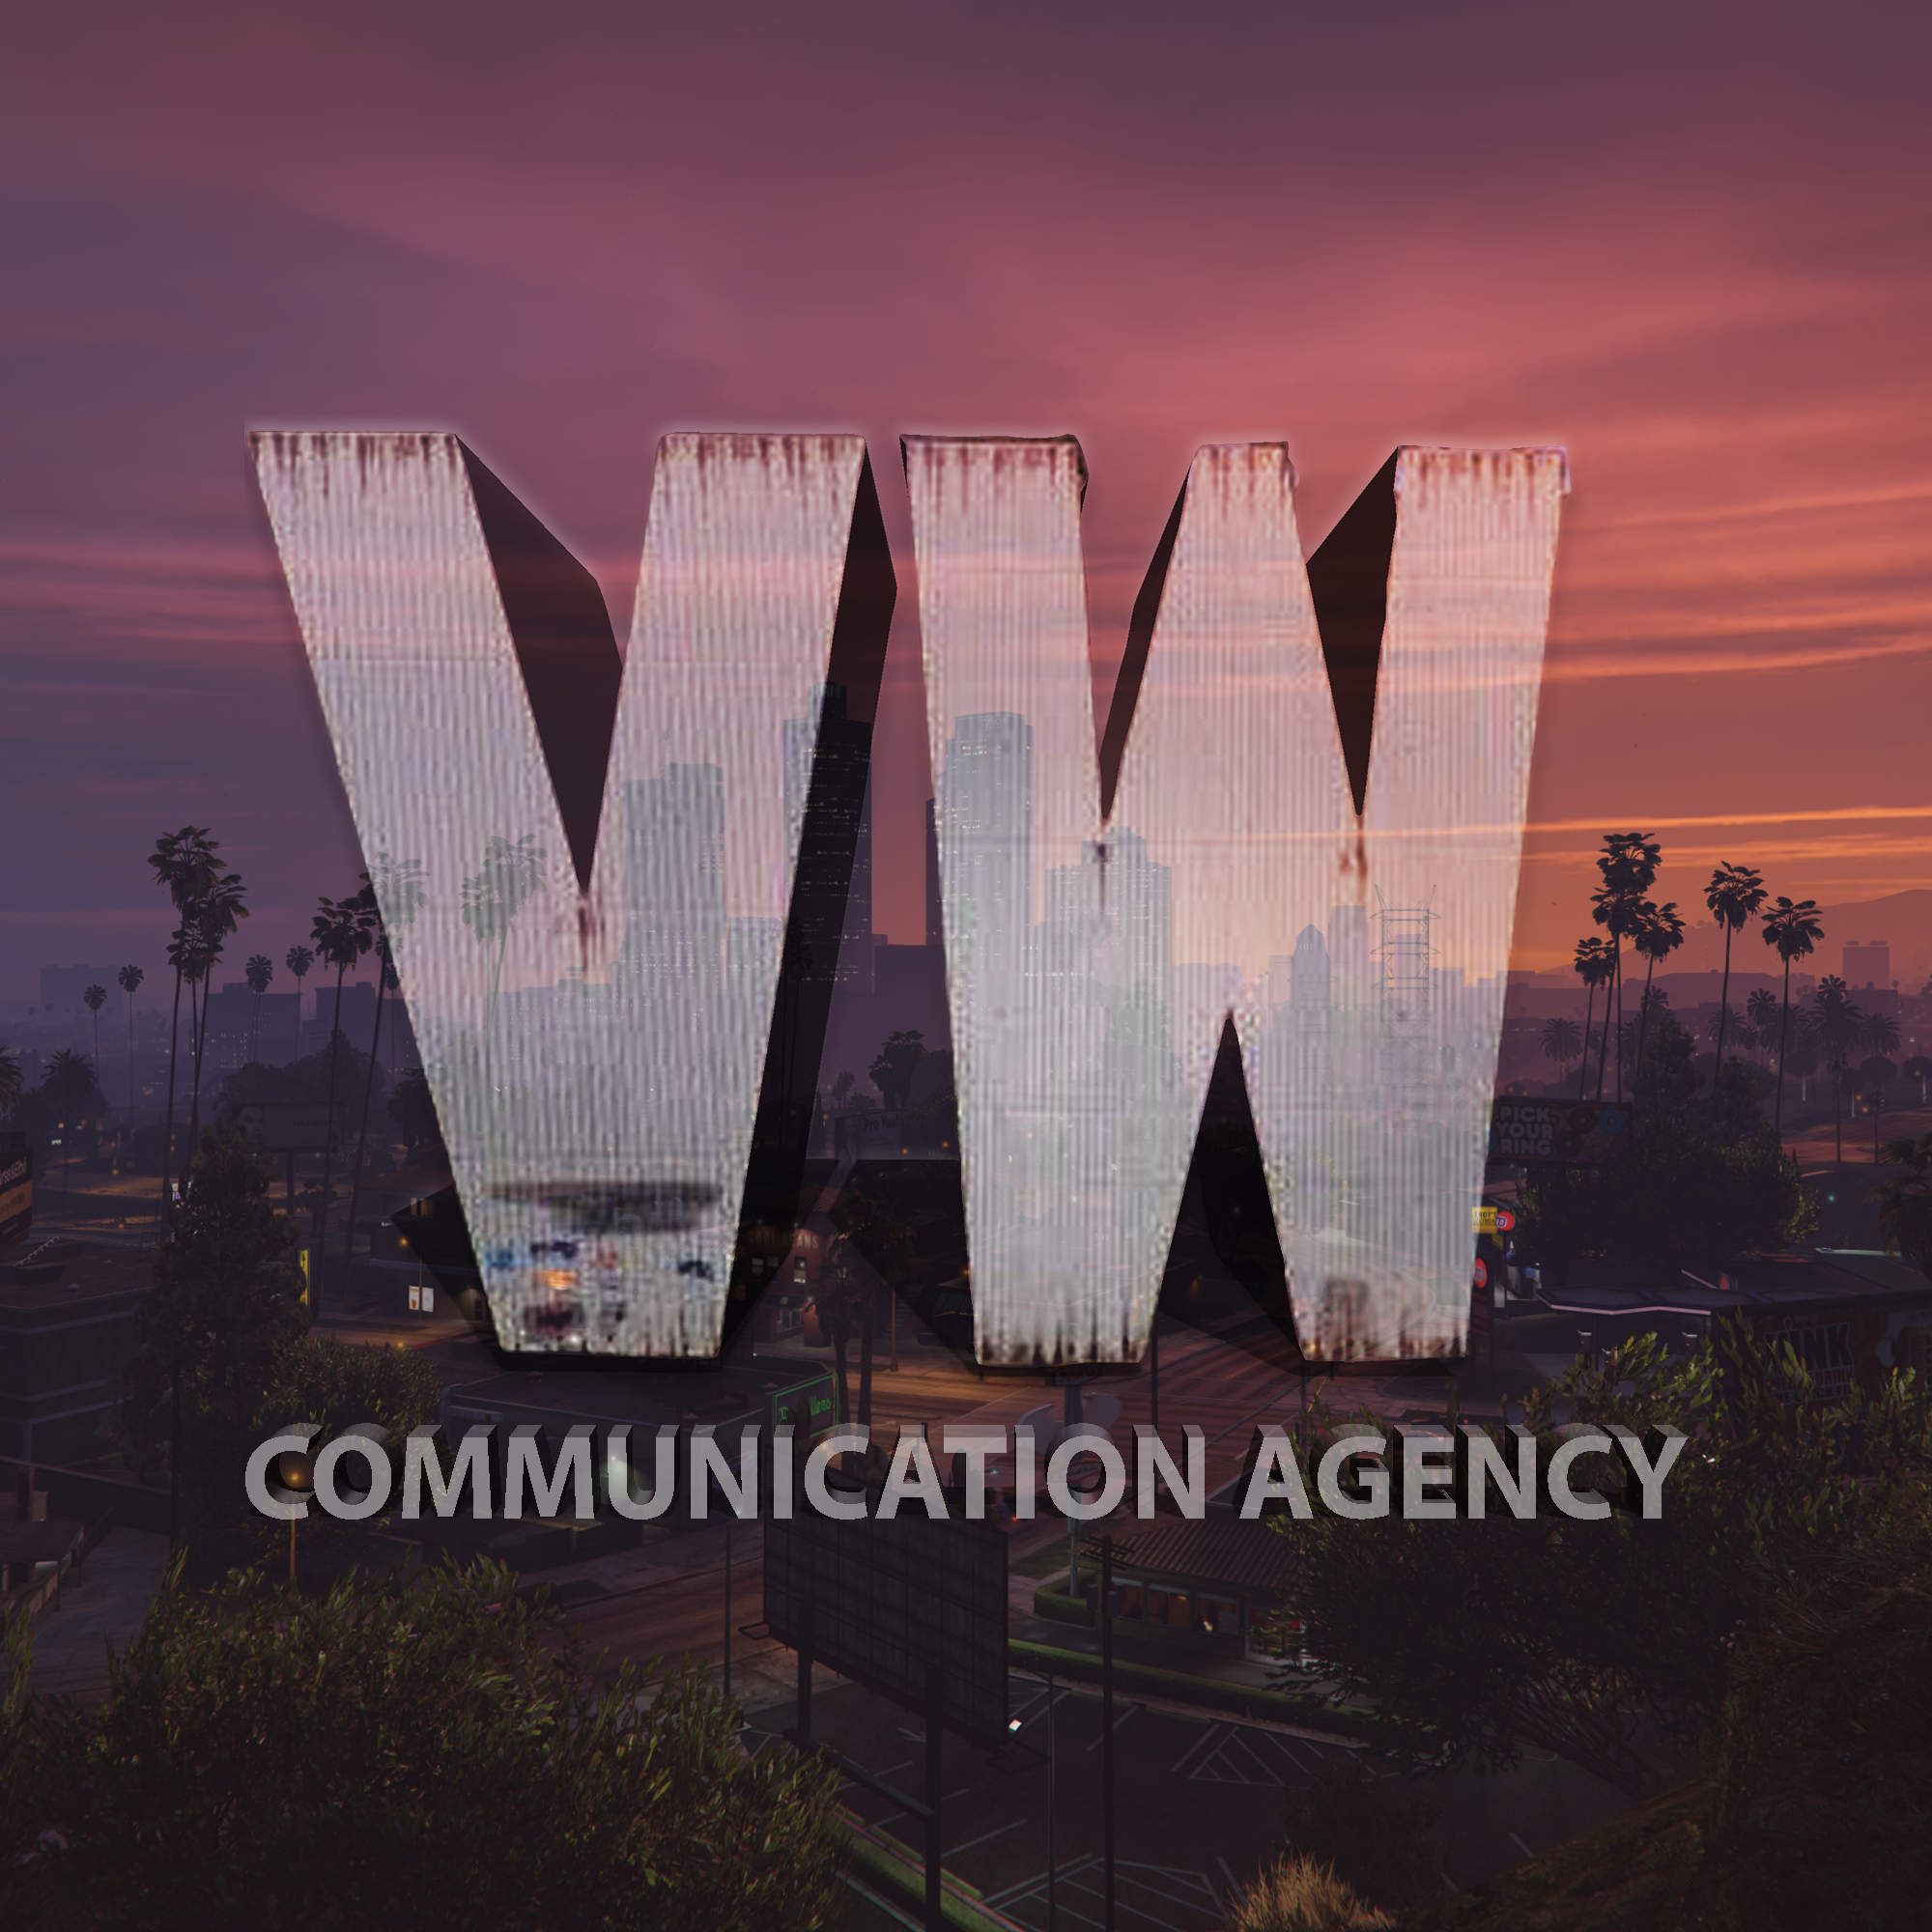 Vinewood Communication Agency